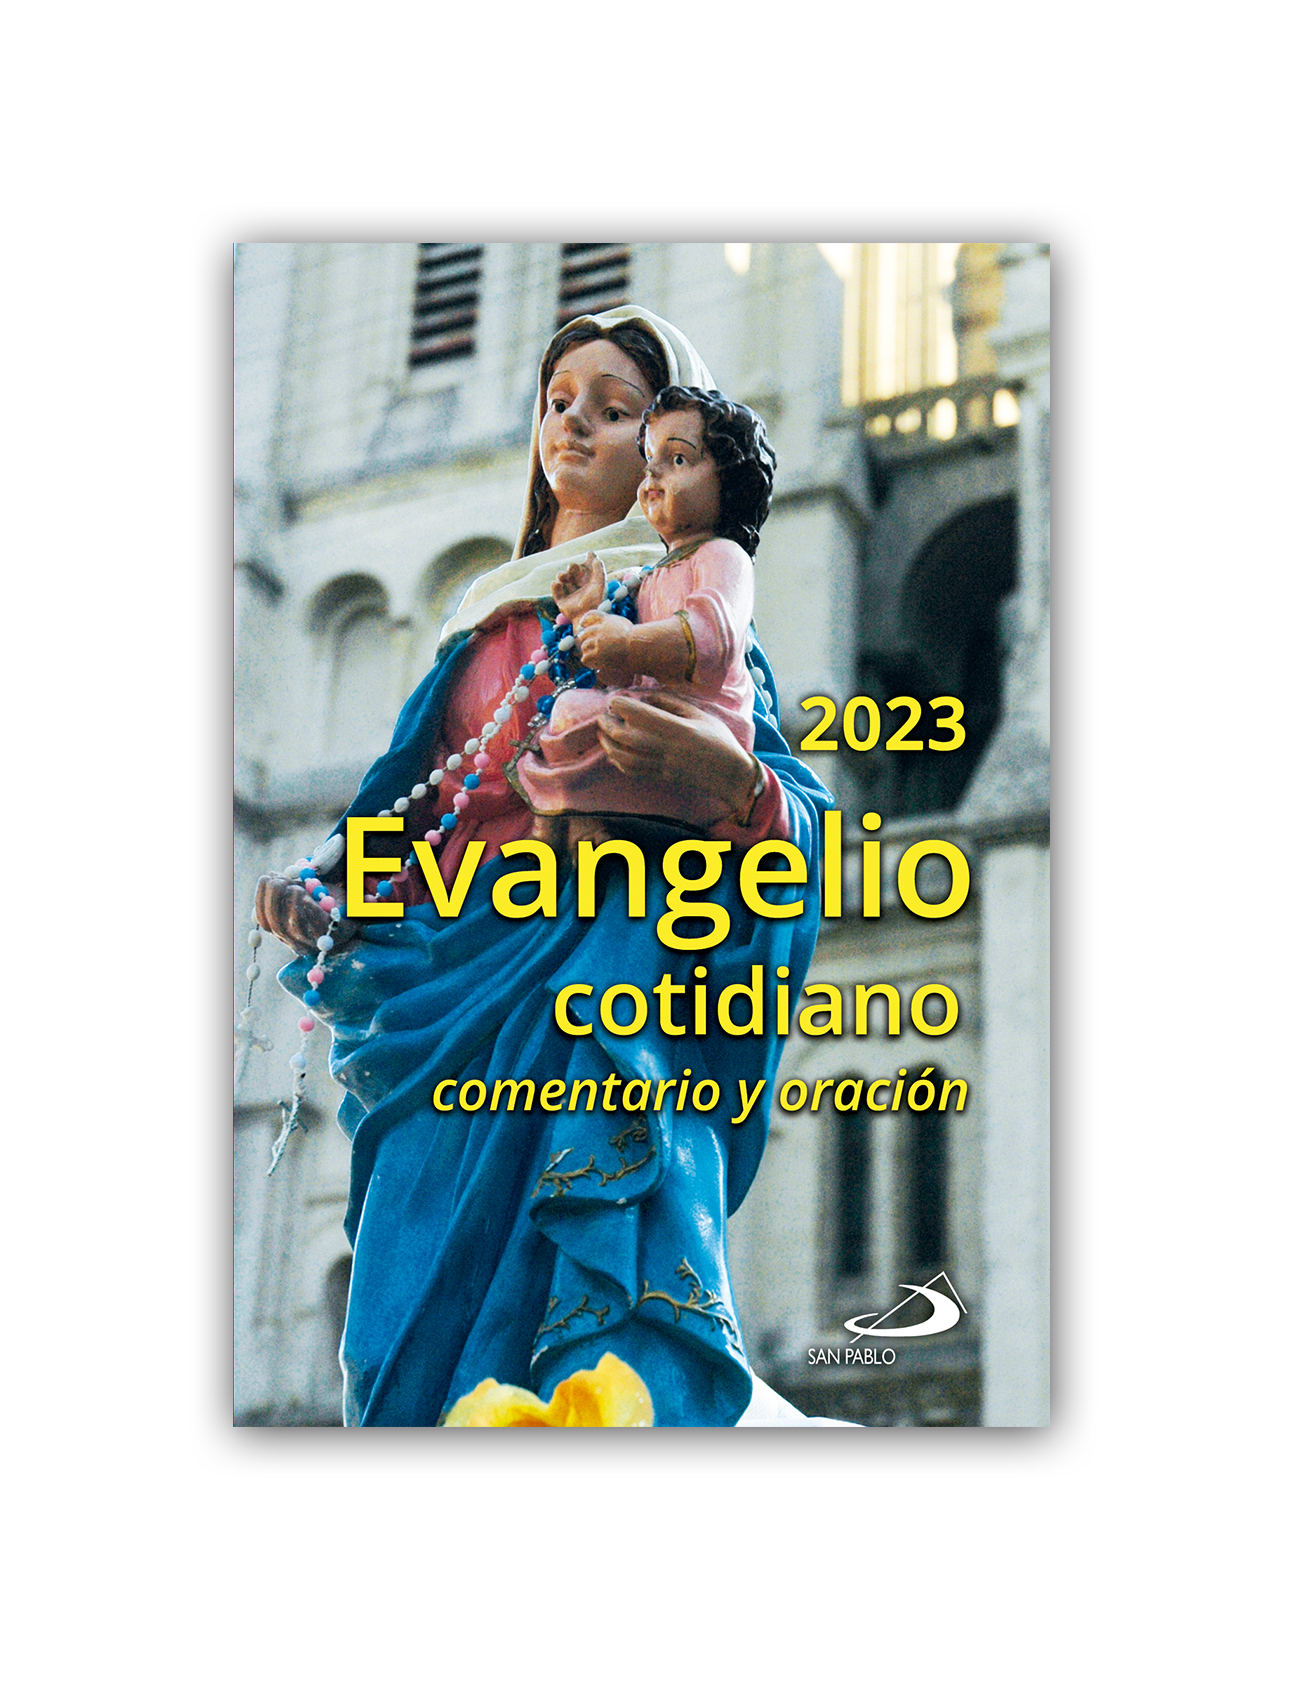 EVANGELIO COTIDIANO 2023 - TAPA MARIANA